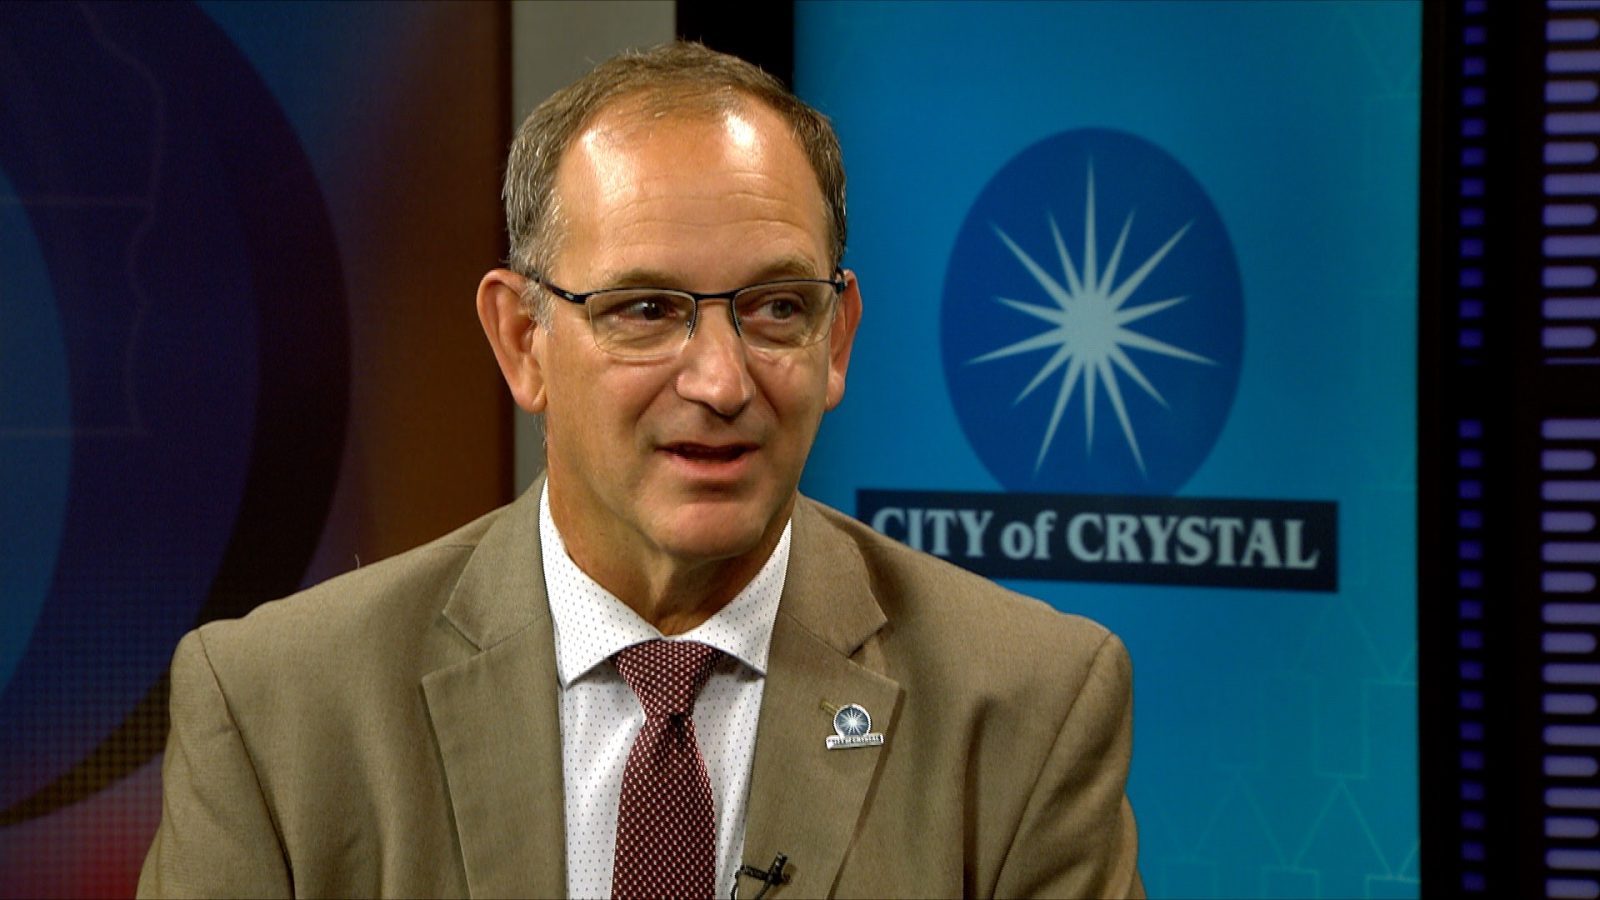 Crystal Mayor Jim Adams